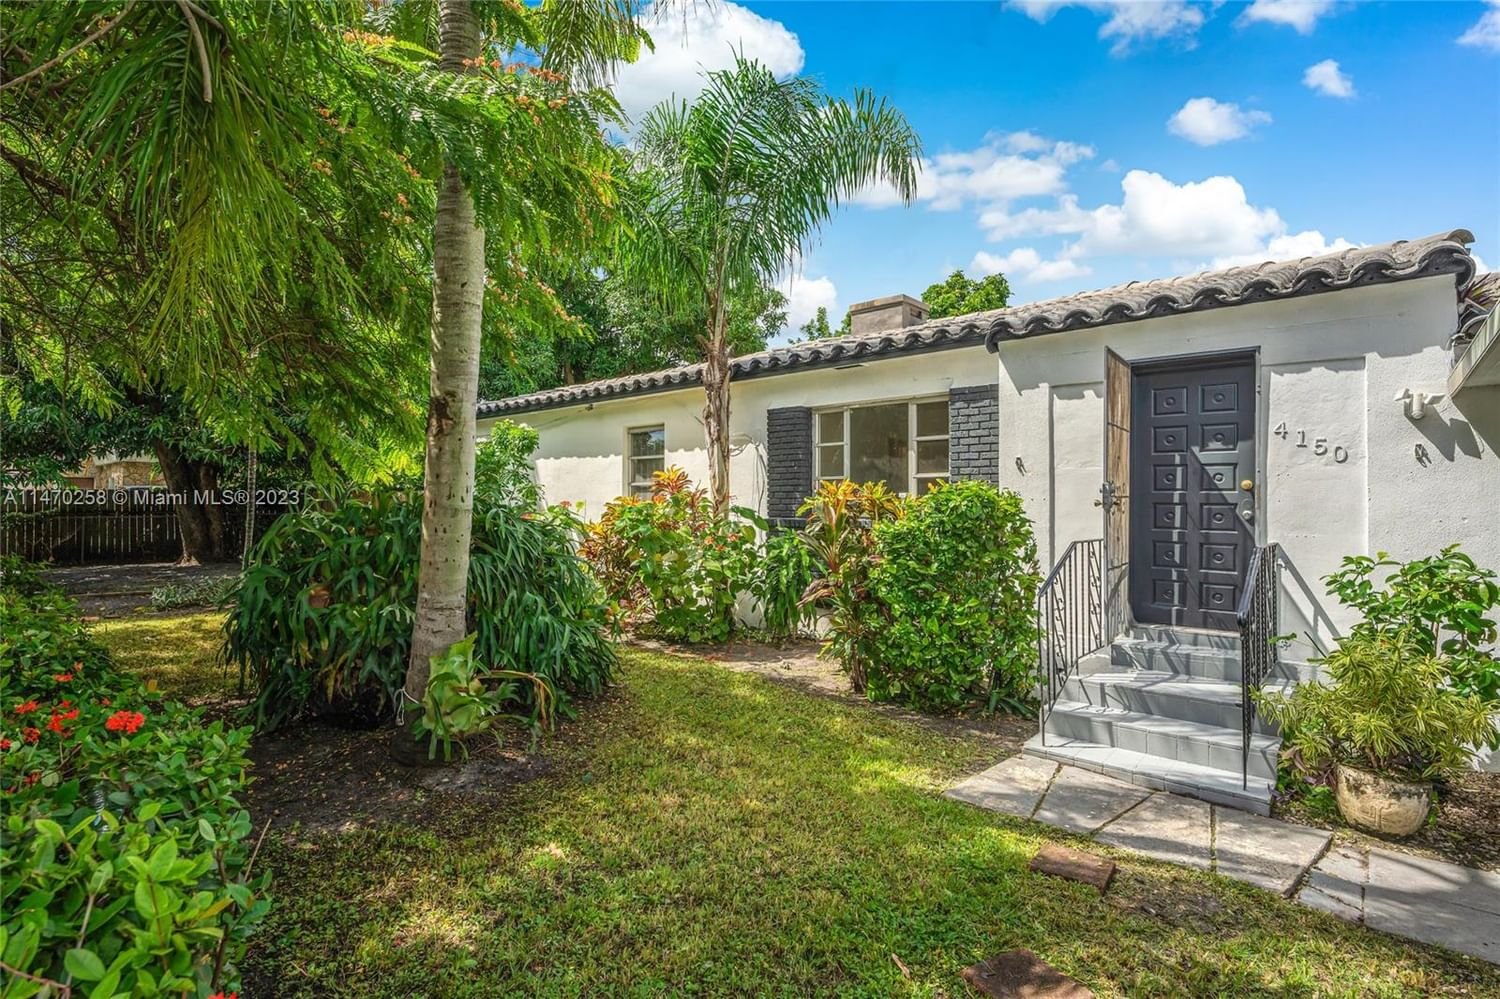 Real estate property located at 4150 10th Ave, Miami-Dade County, Miami, FL